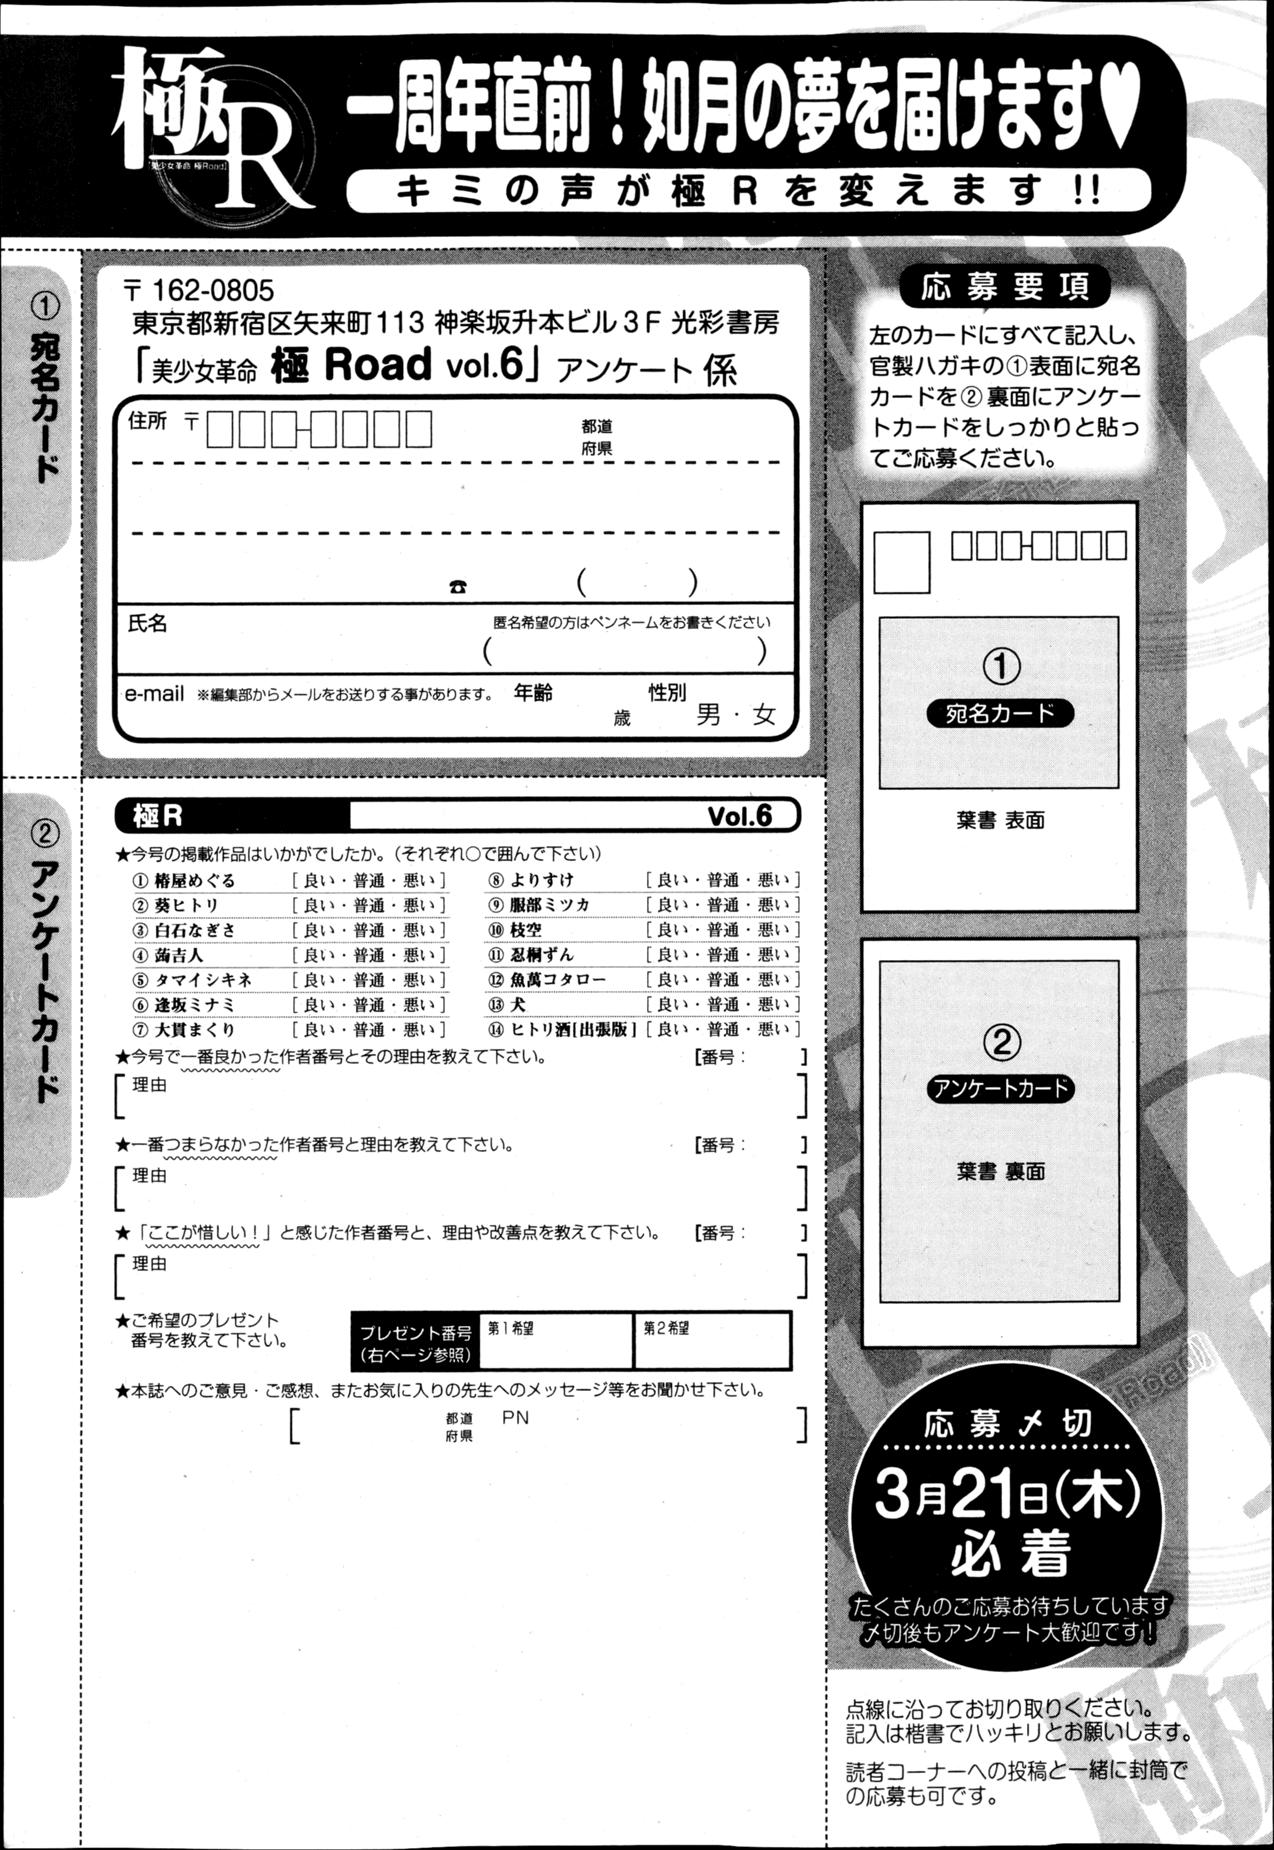 Bishoujo Kakumei KIWAME Road Vol.6 257